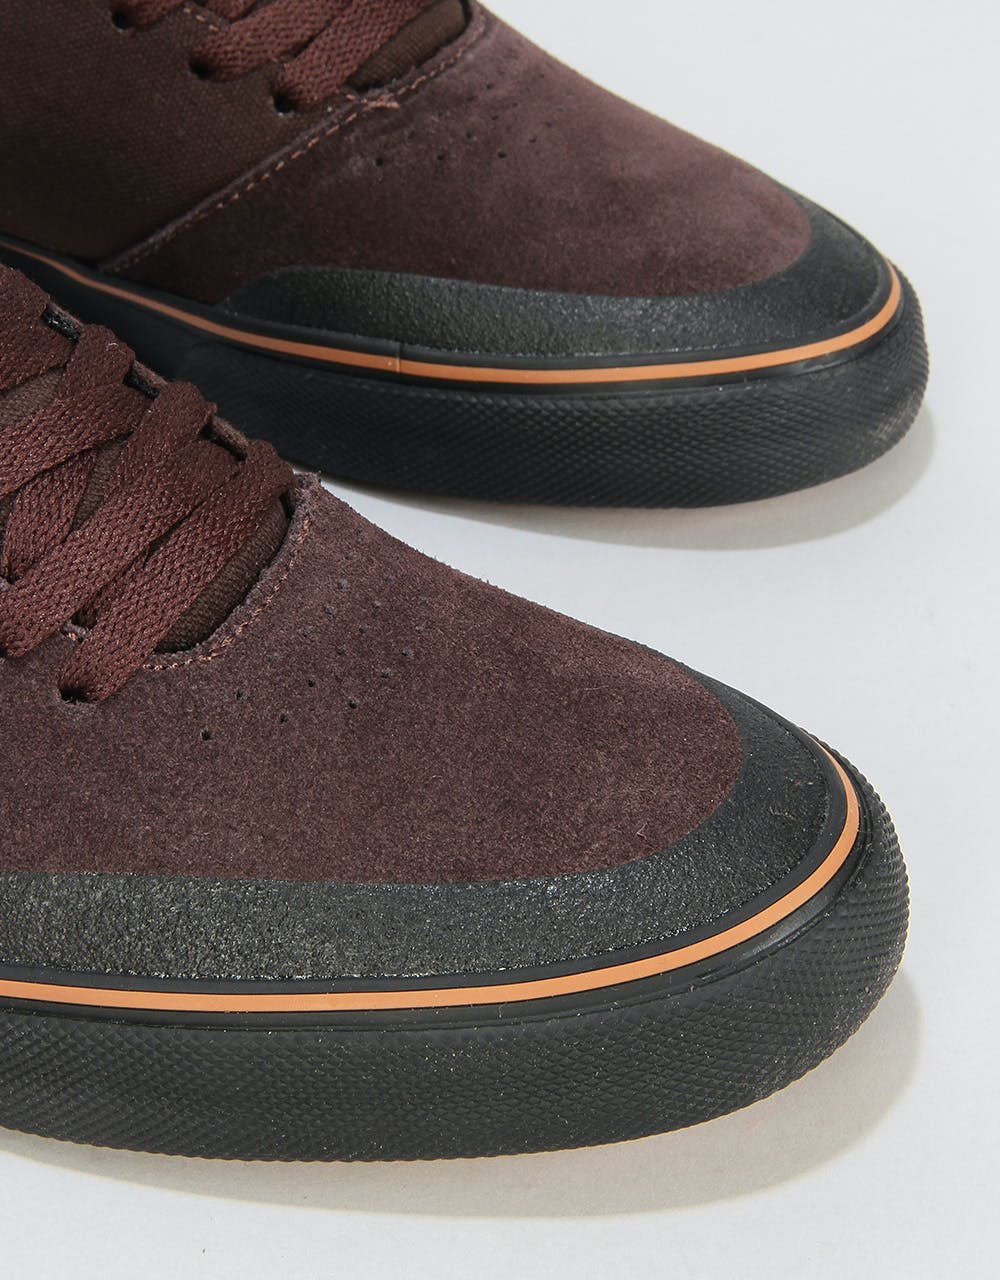 Etnies Marana Vulc Skate Shoes - Brown/Black